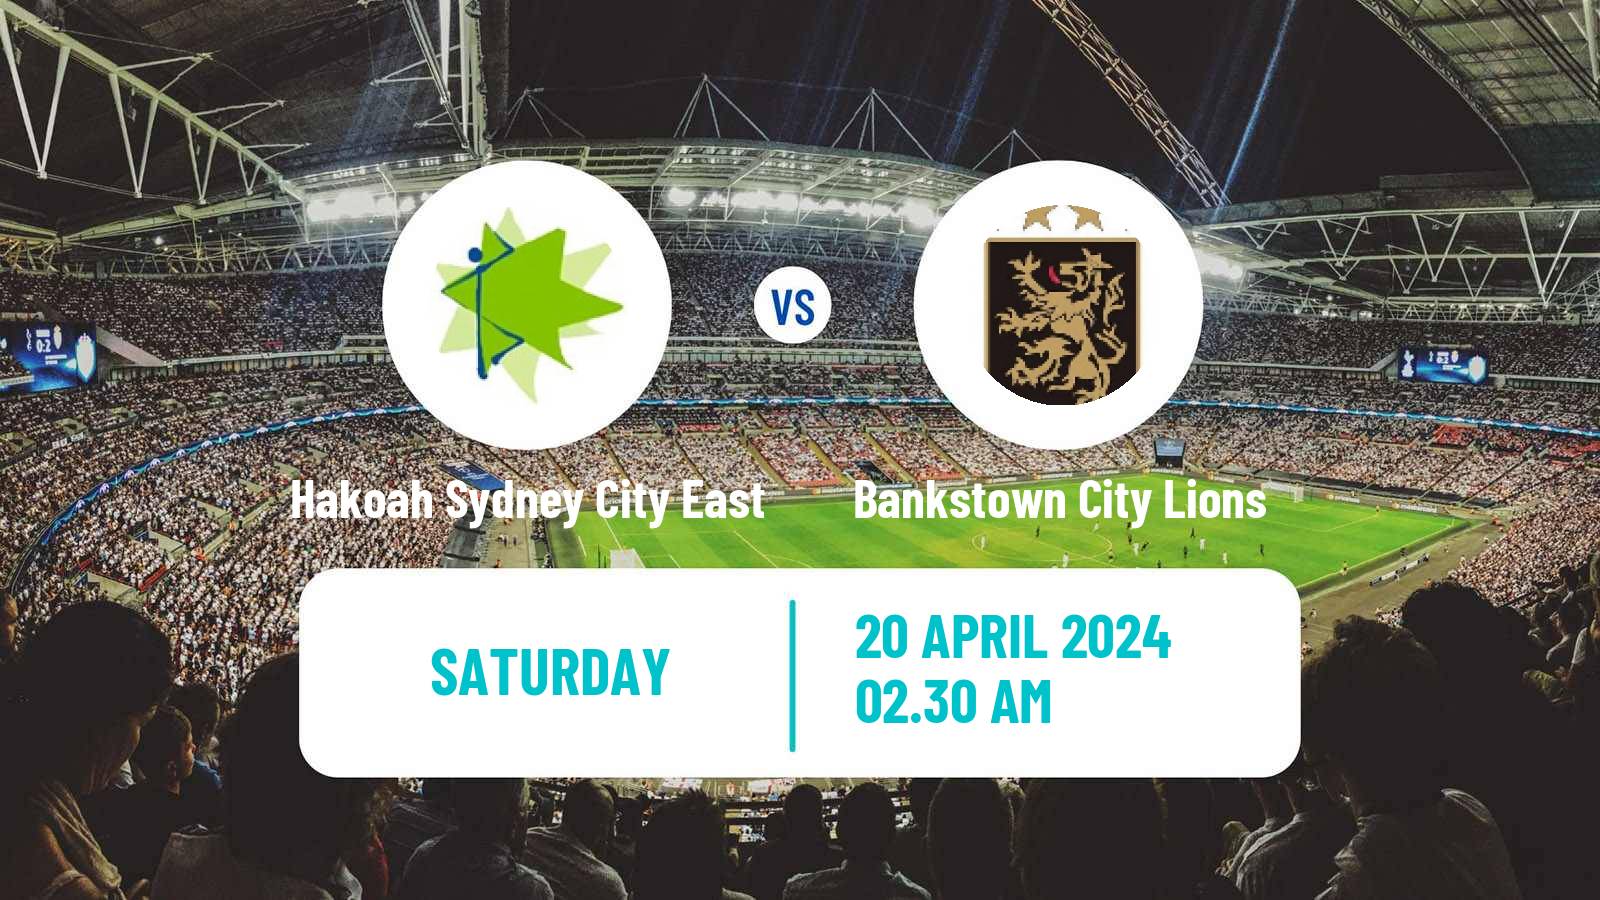 Soccer Australian NSW League One Hakoah Sydney City East - Bankstown City Lions